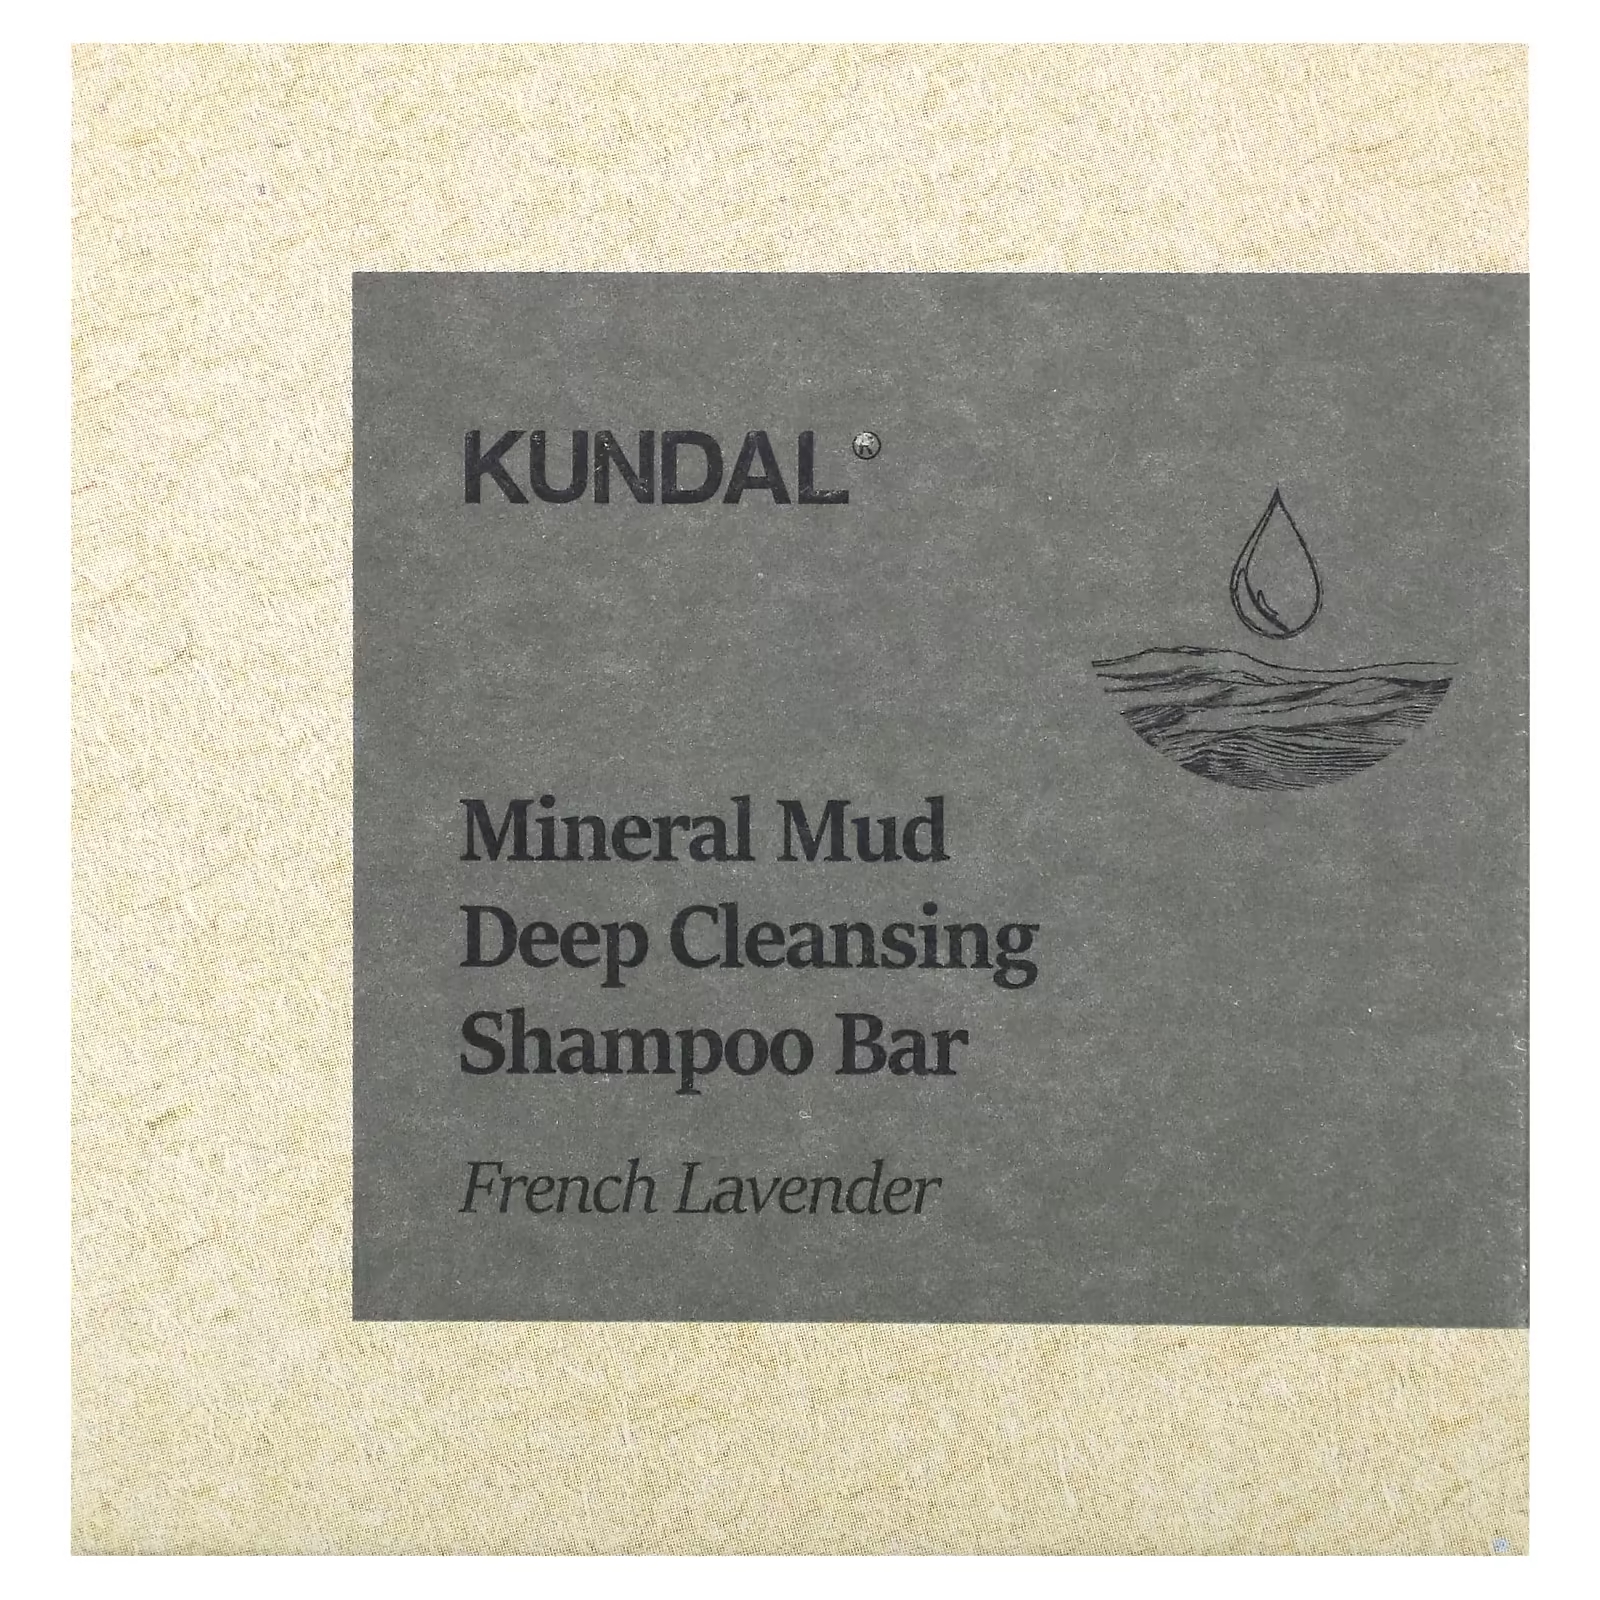 Минеральная грязь Kundal Mineral Mud Deep Cleansing Shampoo Bar с французской лавандой